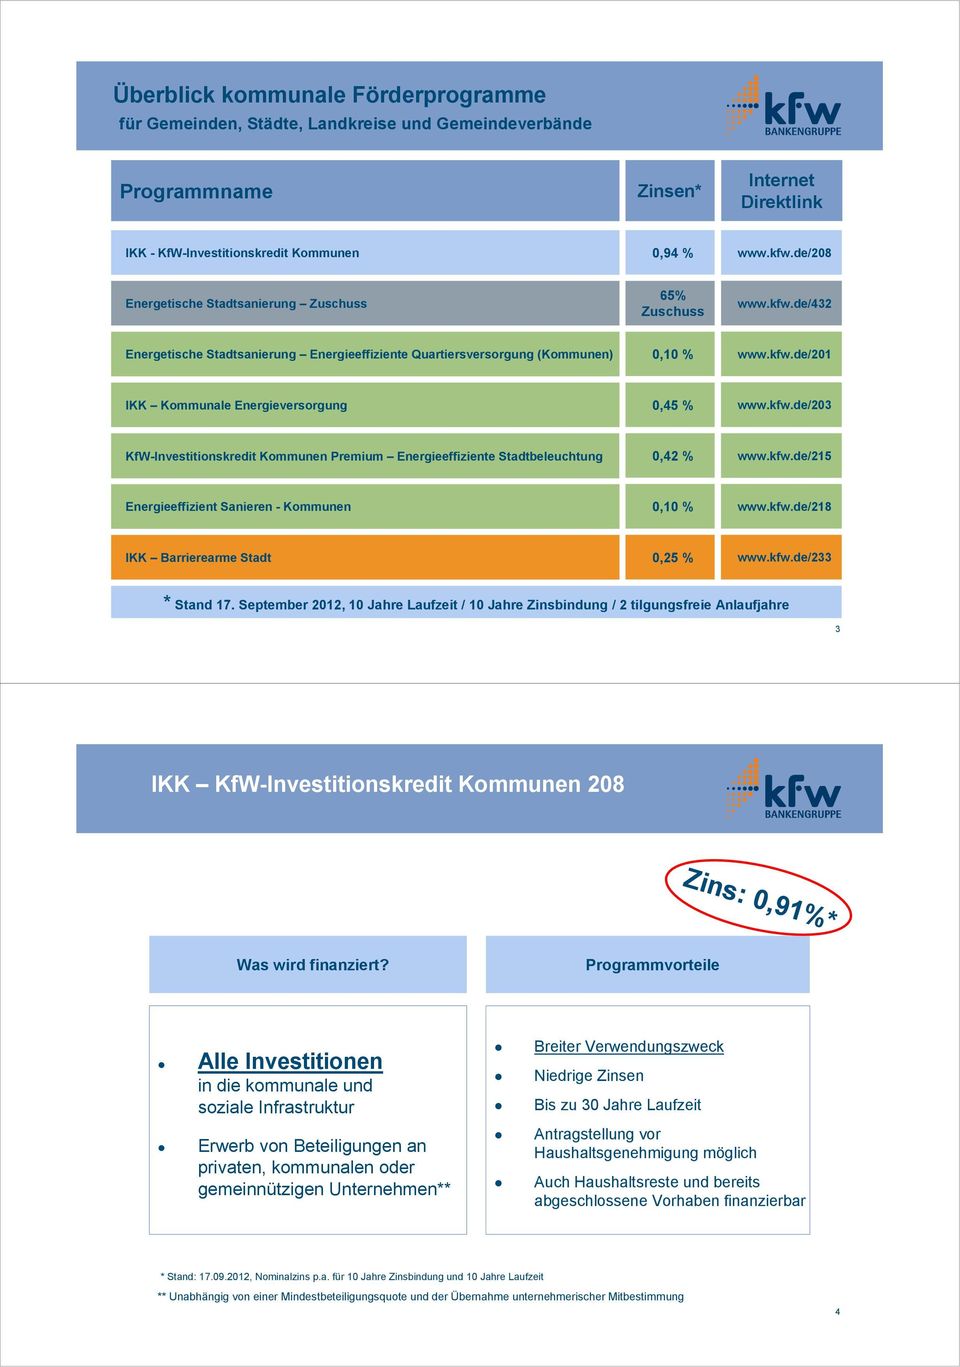 kfw.de/203 KfW-Investitionskredit Kommunen Premium Energieeffiziente Stadtbeleuchtung 0,42 % www.kfw.de/215 Energieeffizient Sanieren - Kommunen 0,10 % www.kfw.de/218 IKK Barrierearme Stadt 0,25 % www.